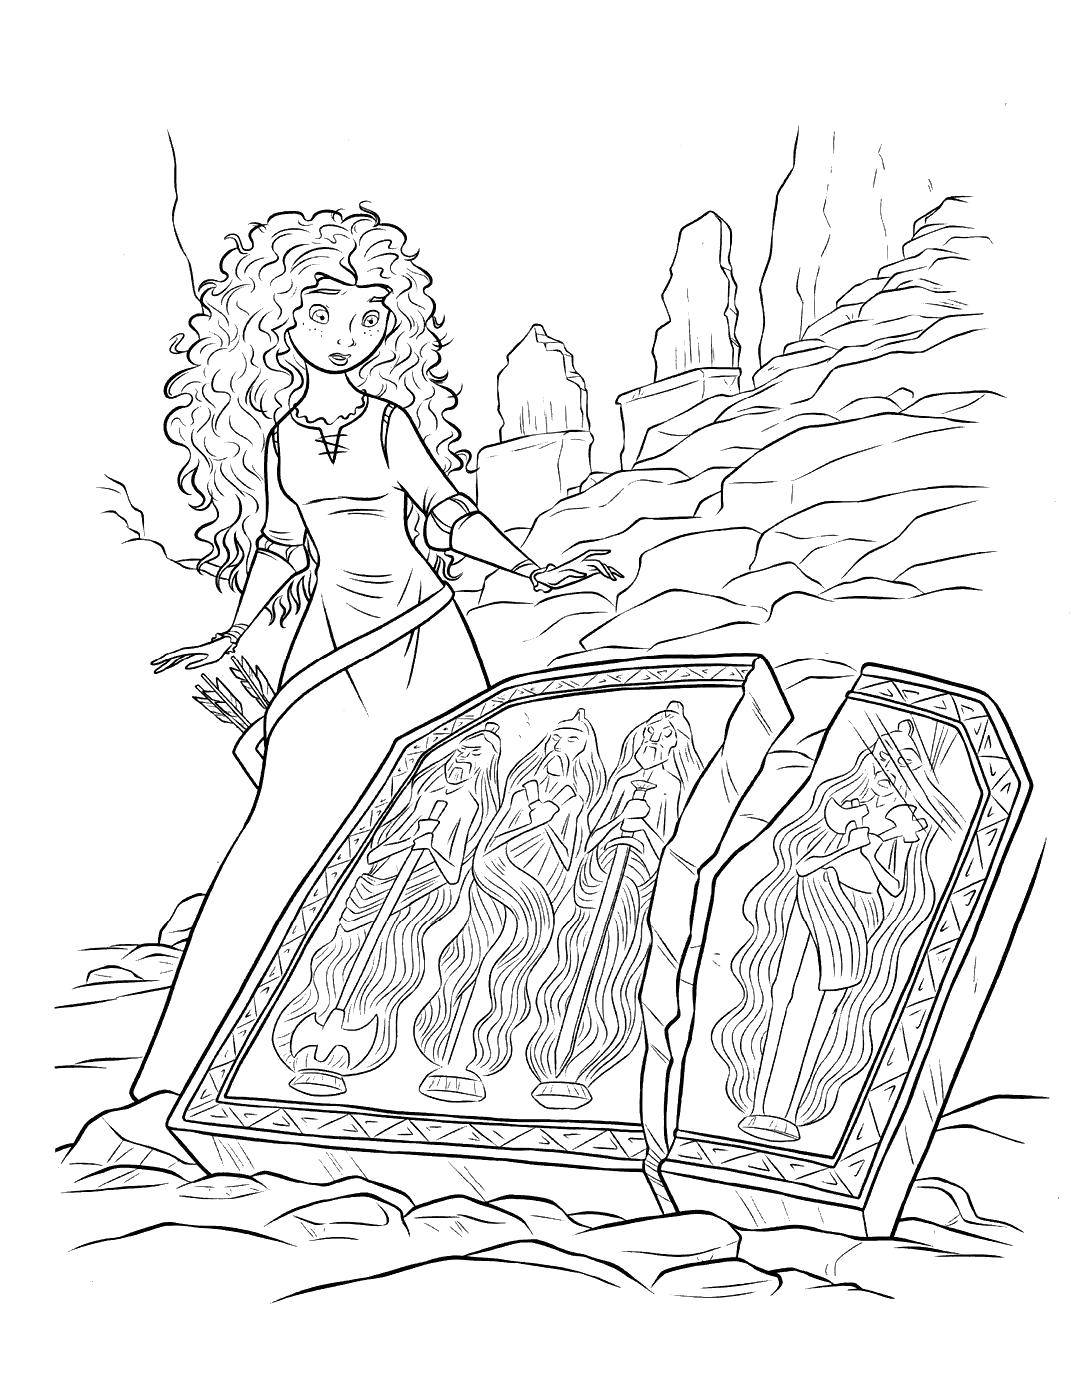 Coloring Princess Merida. Category brave heart. Tags:  Cartoon character.